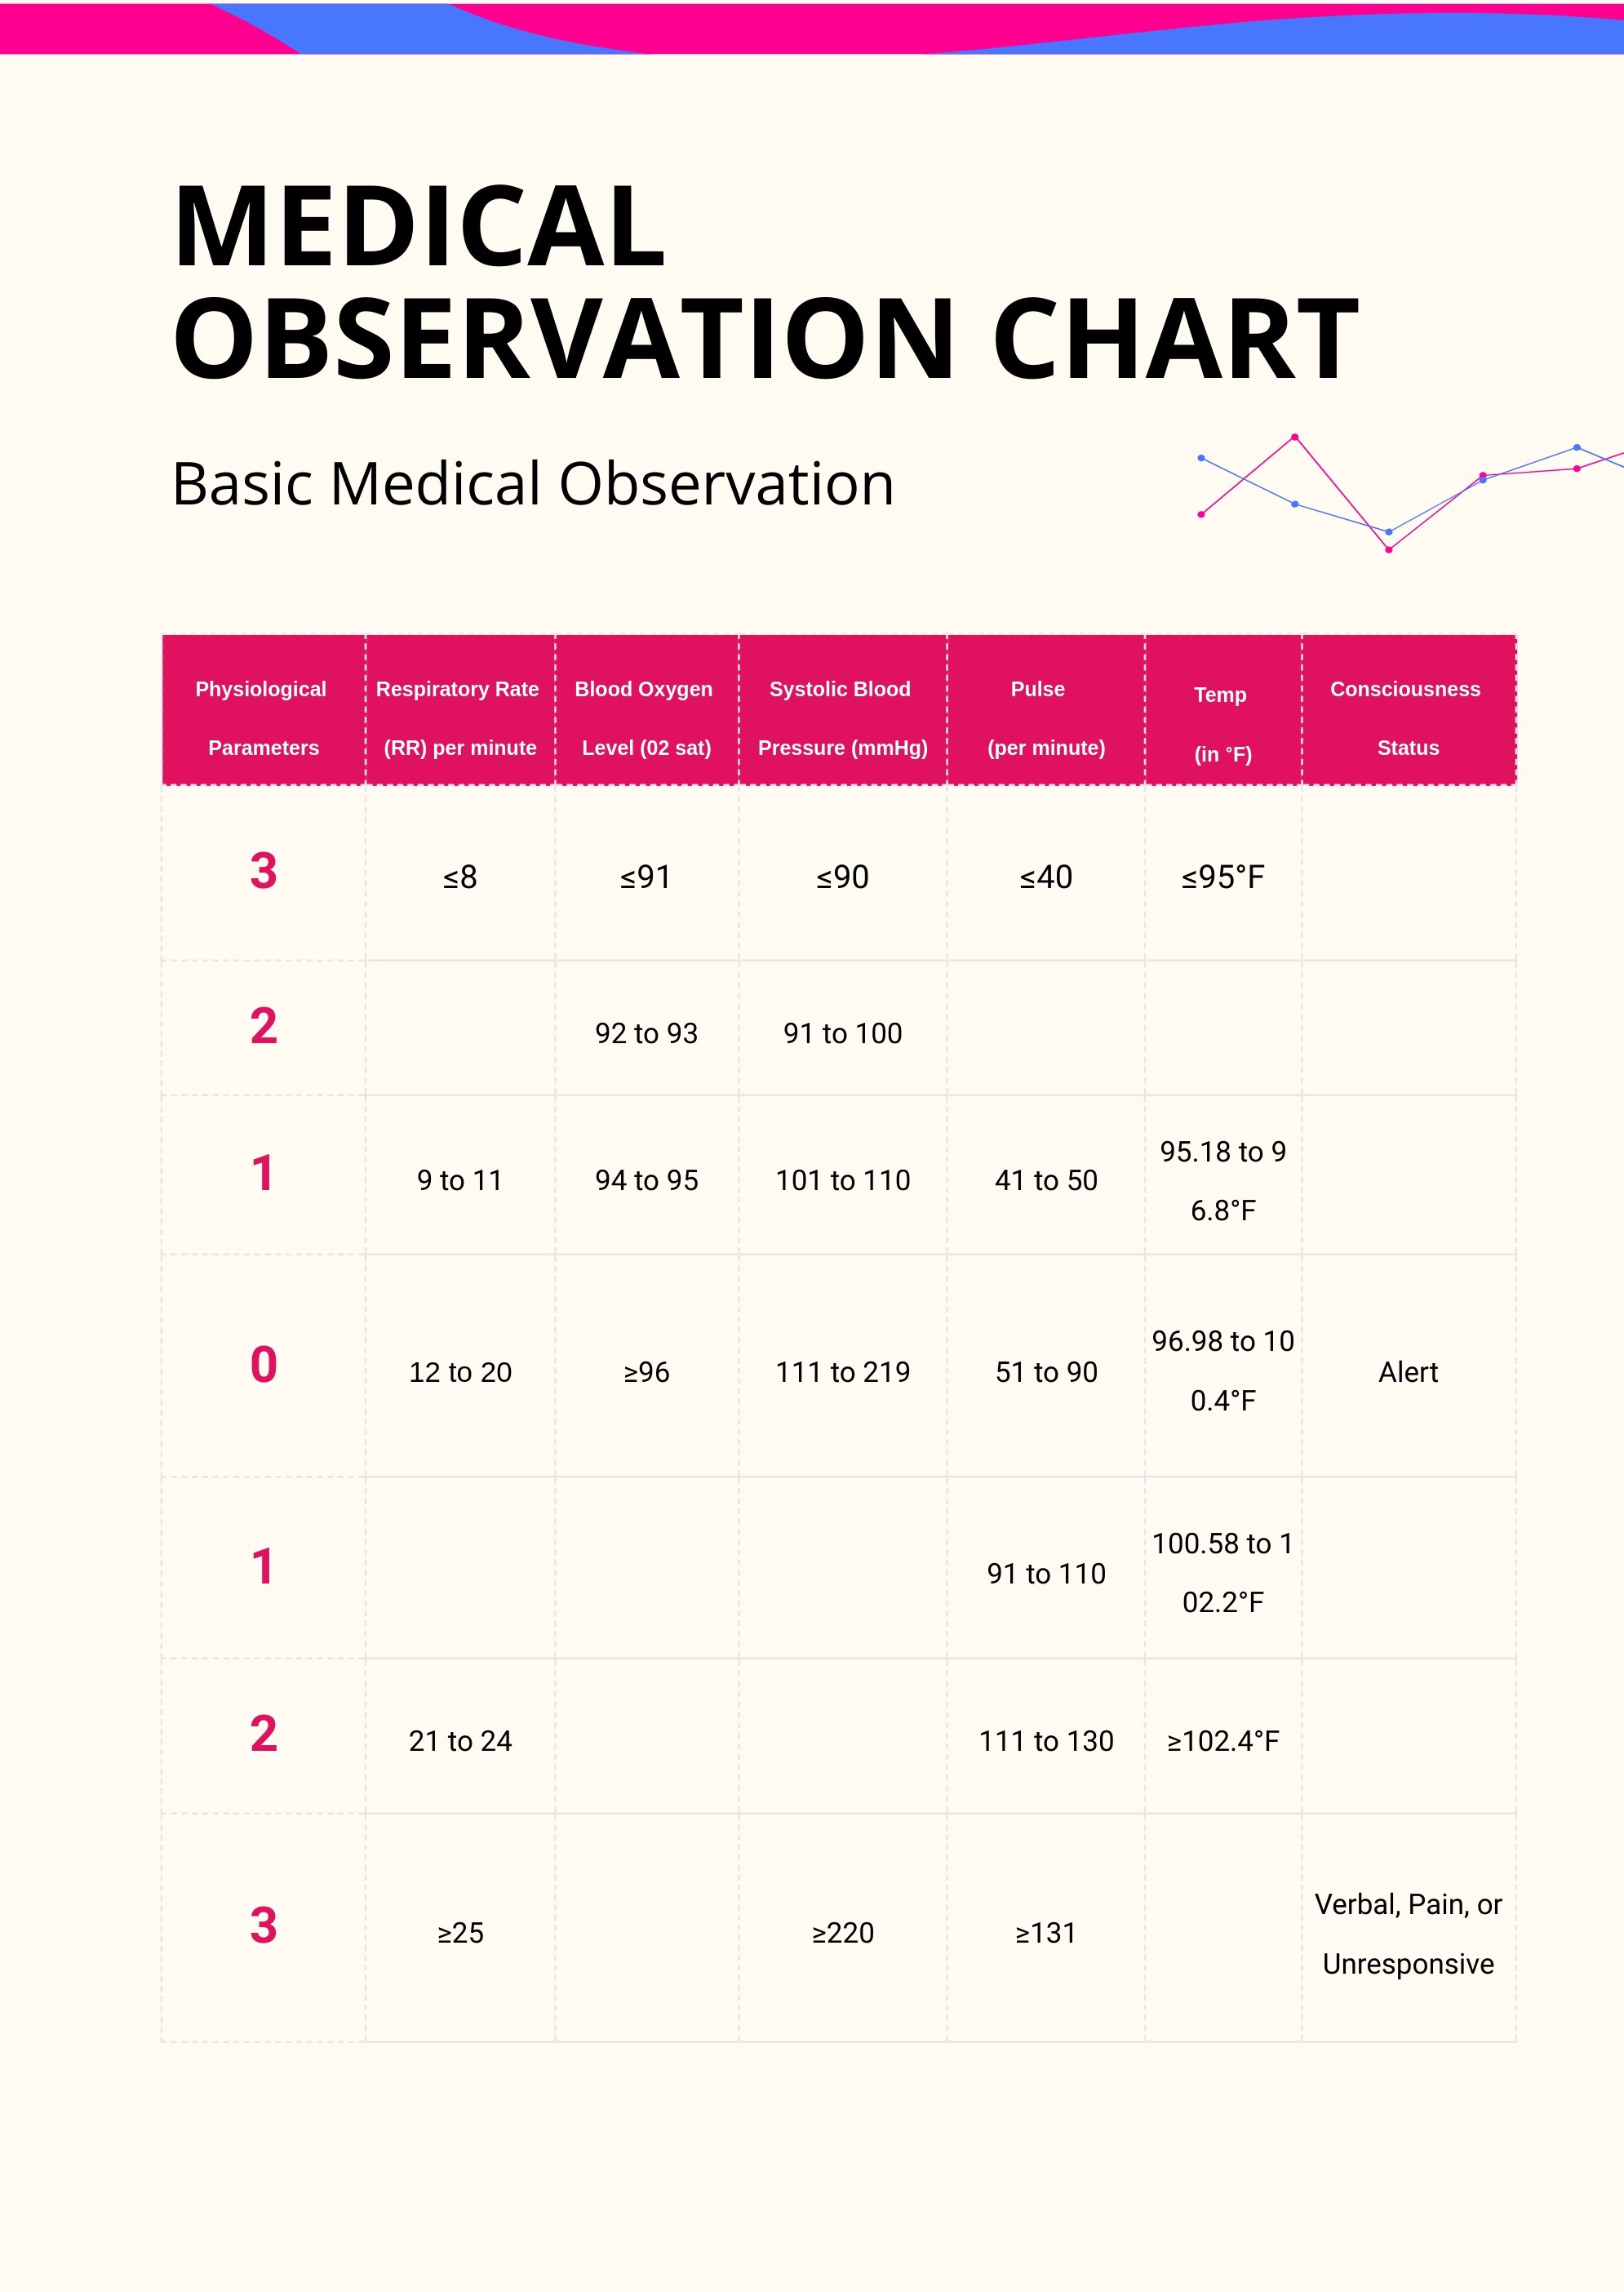 Medical Observation Chart Template in PDF, Illustrator